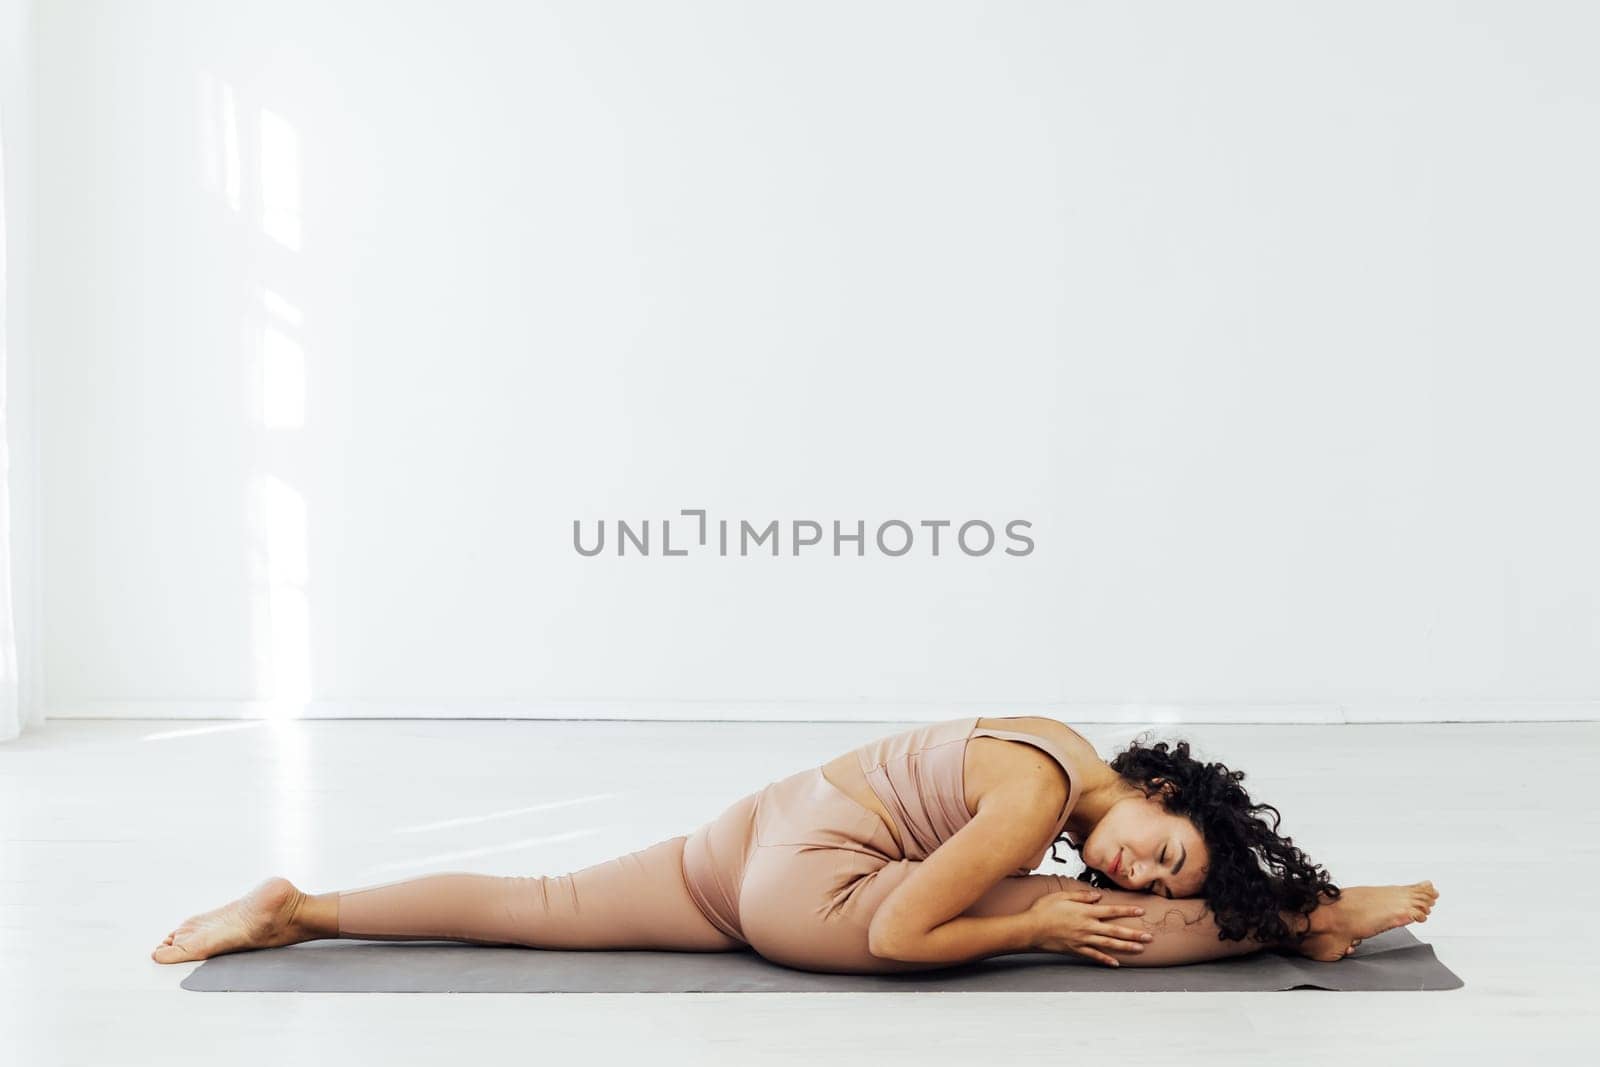 Beautiful brunette woman engaged in yoga asana flexibility body